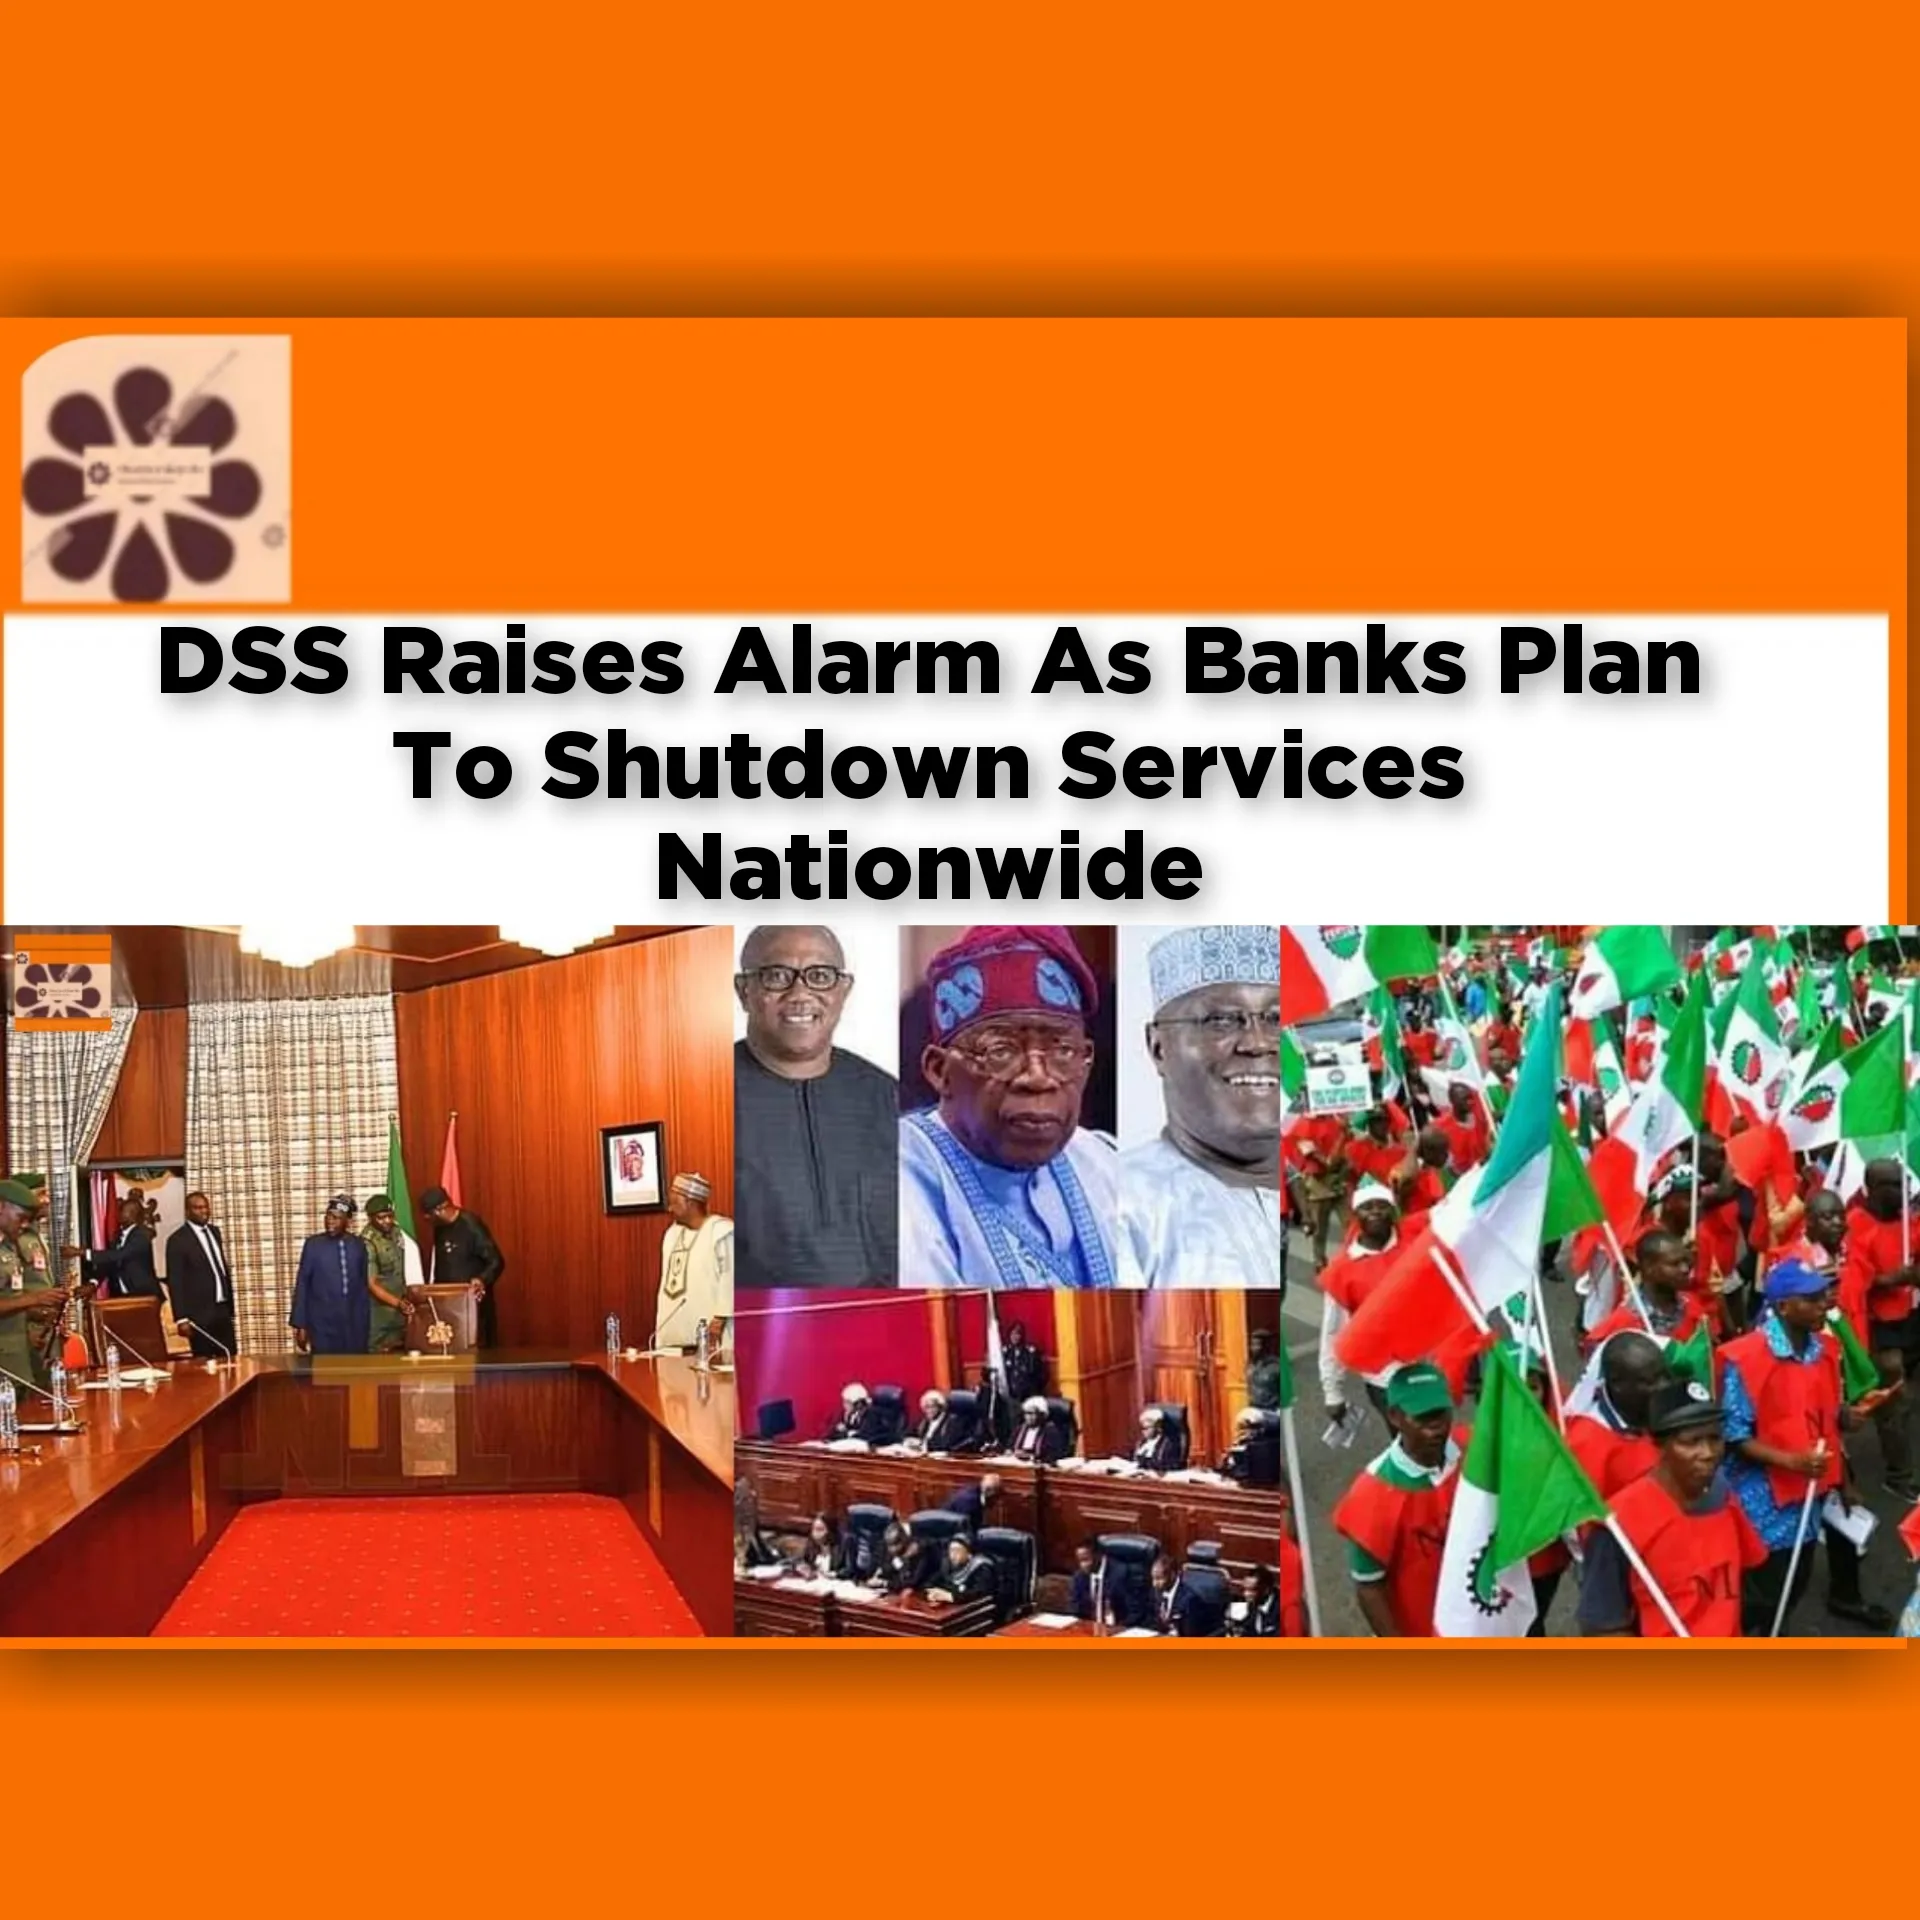 DSS Raises Alarm As Banks Plan To Shutdown Services Nationwide ~ OsazuwaAkonedo #banks #Bola #Dss #NLC #PEPT #Strike #Tinubu #Tribunal